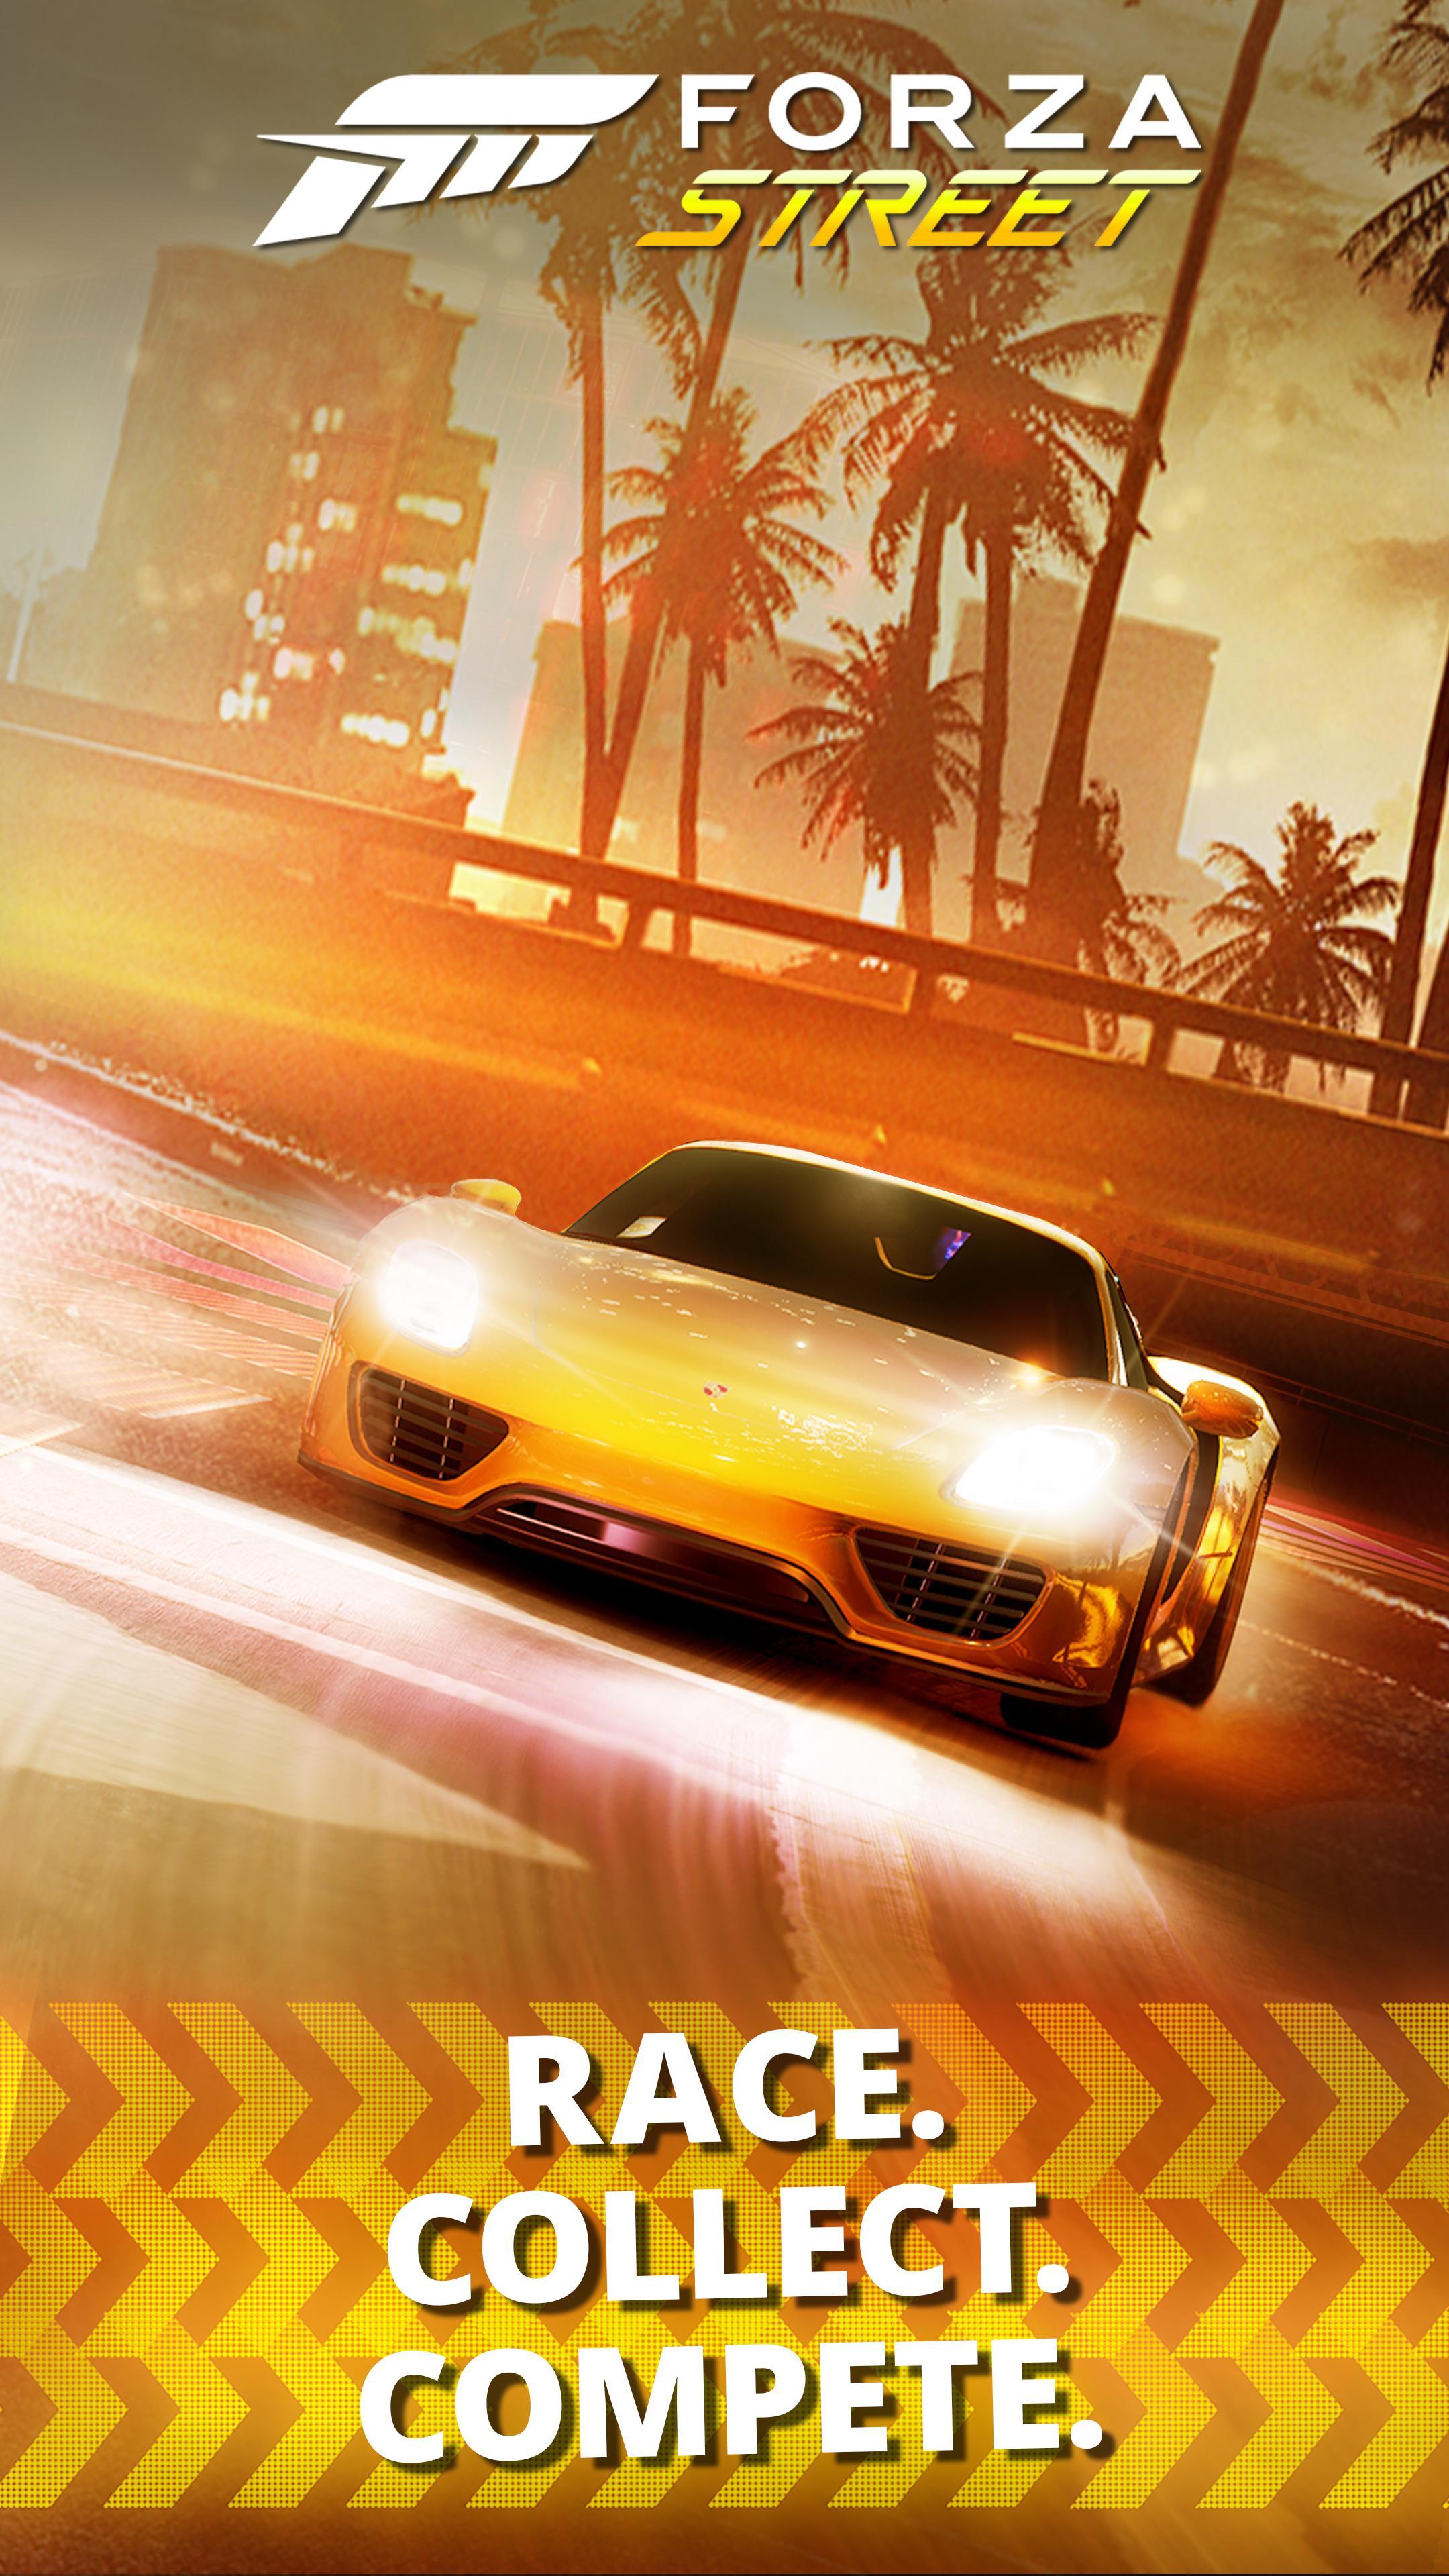 Forza Street Tap Racing Game 33.0.12 Screenshot 1